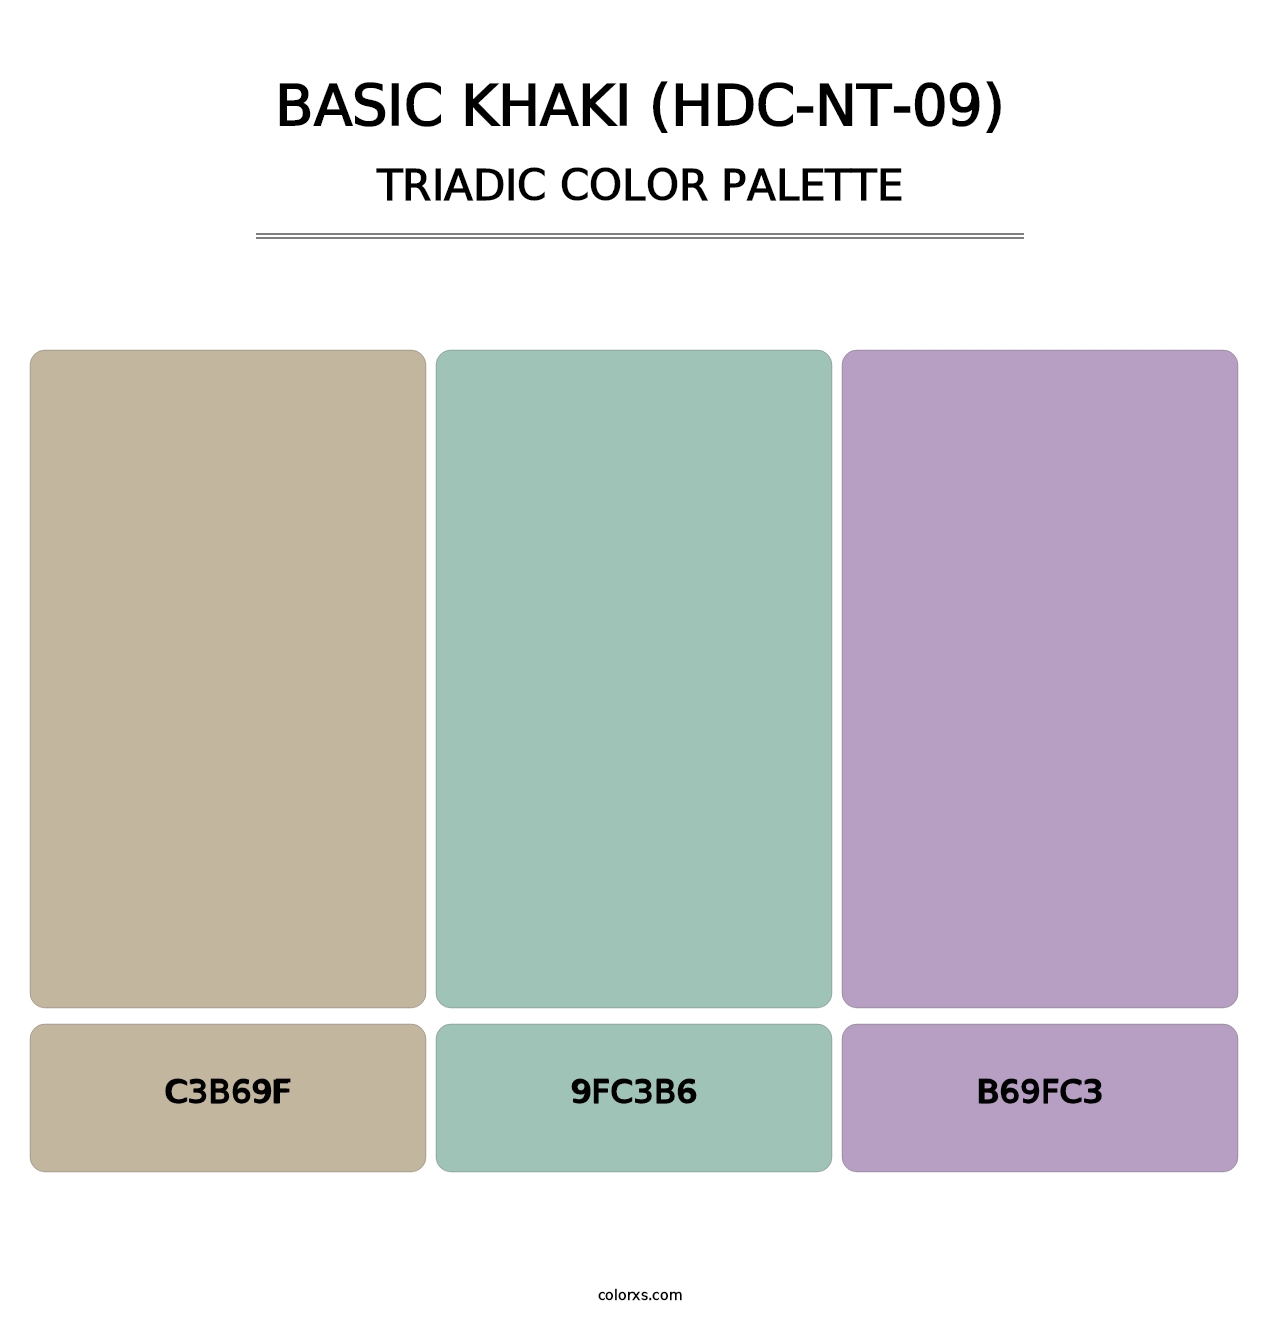 Basic Khaki (HDC-NT-09) - Triadic Color Palette